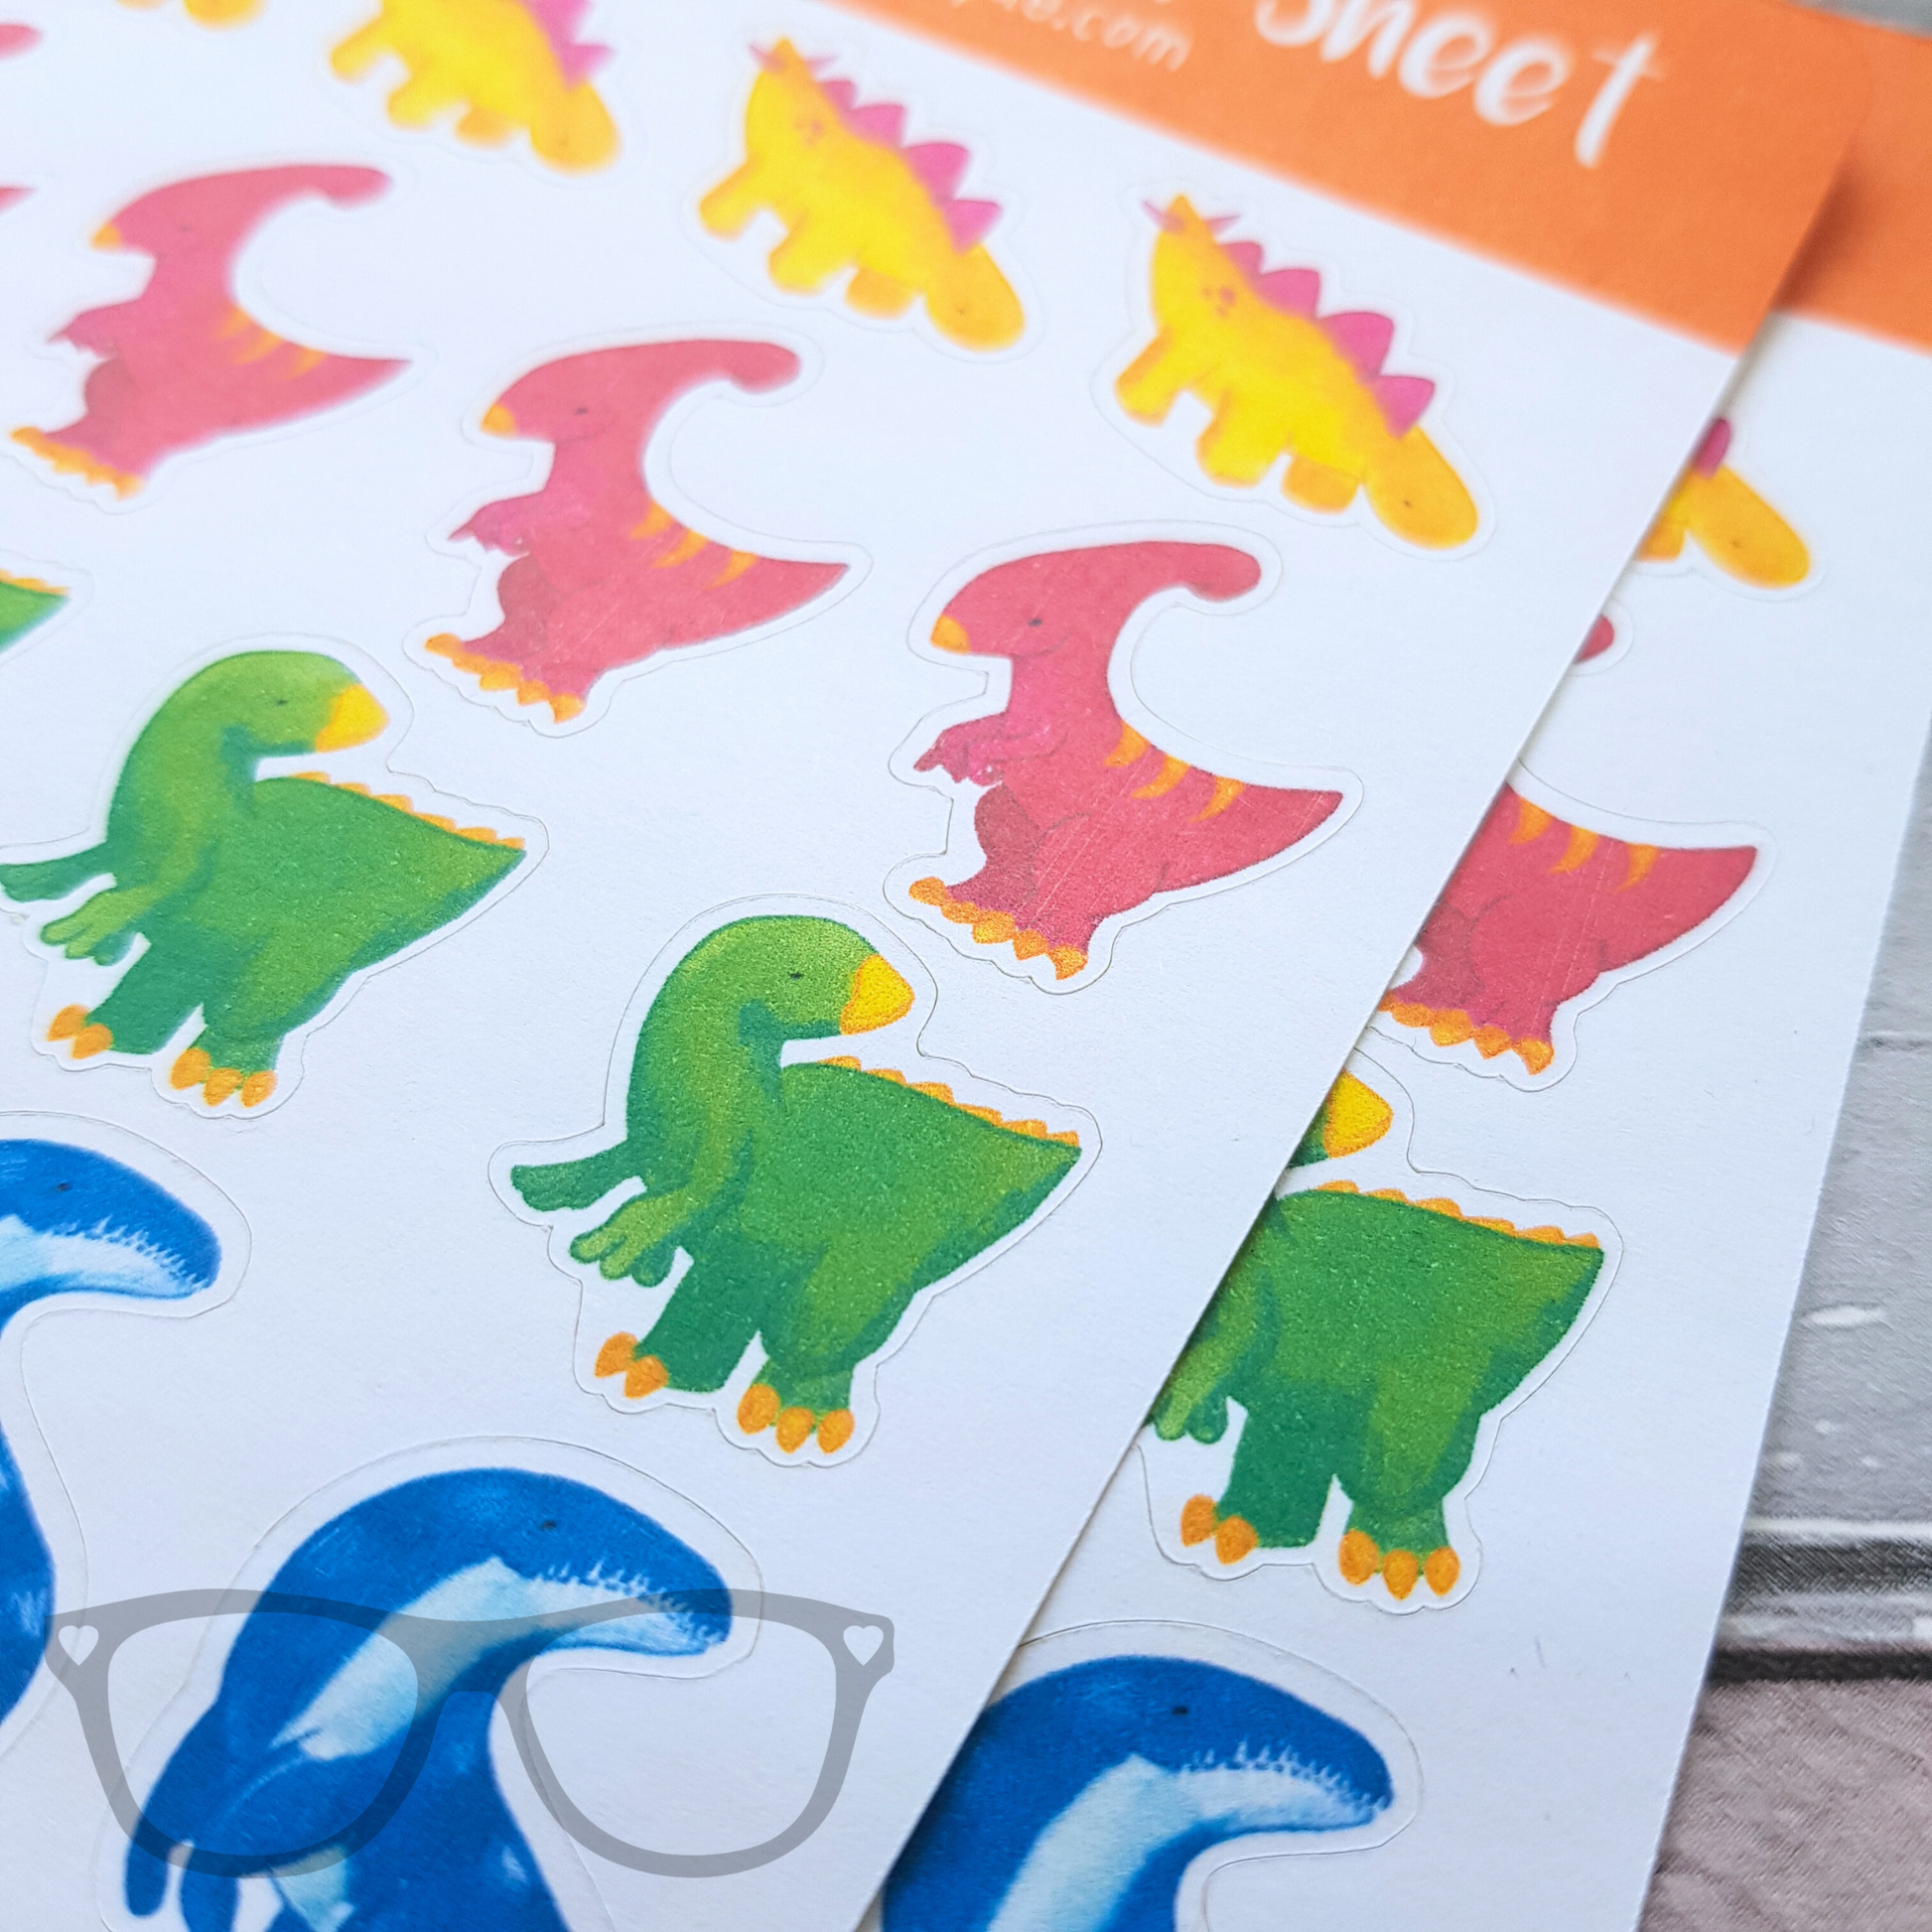 Dinosaur Sticker Sheet - Mini Geek Boutique